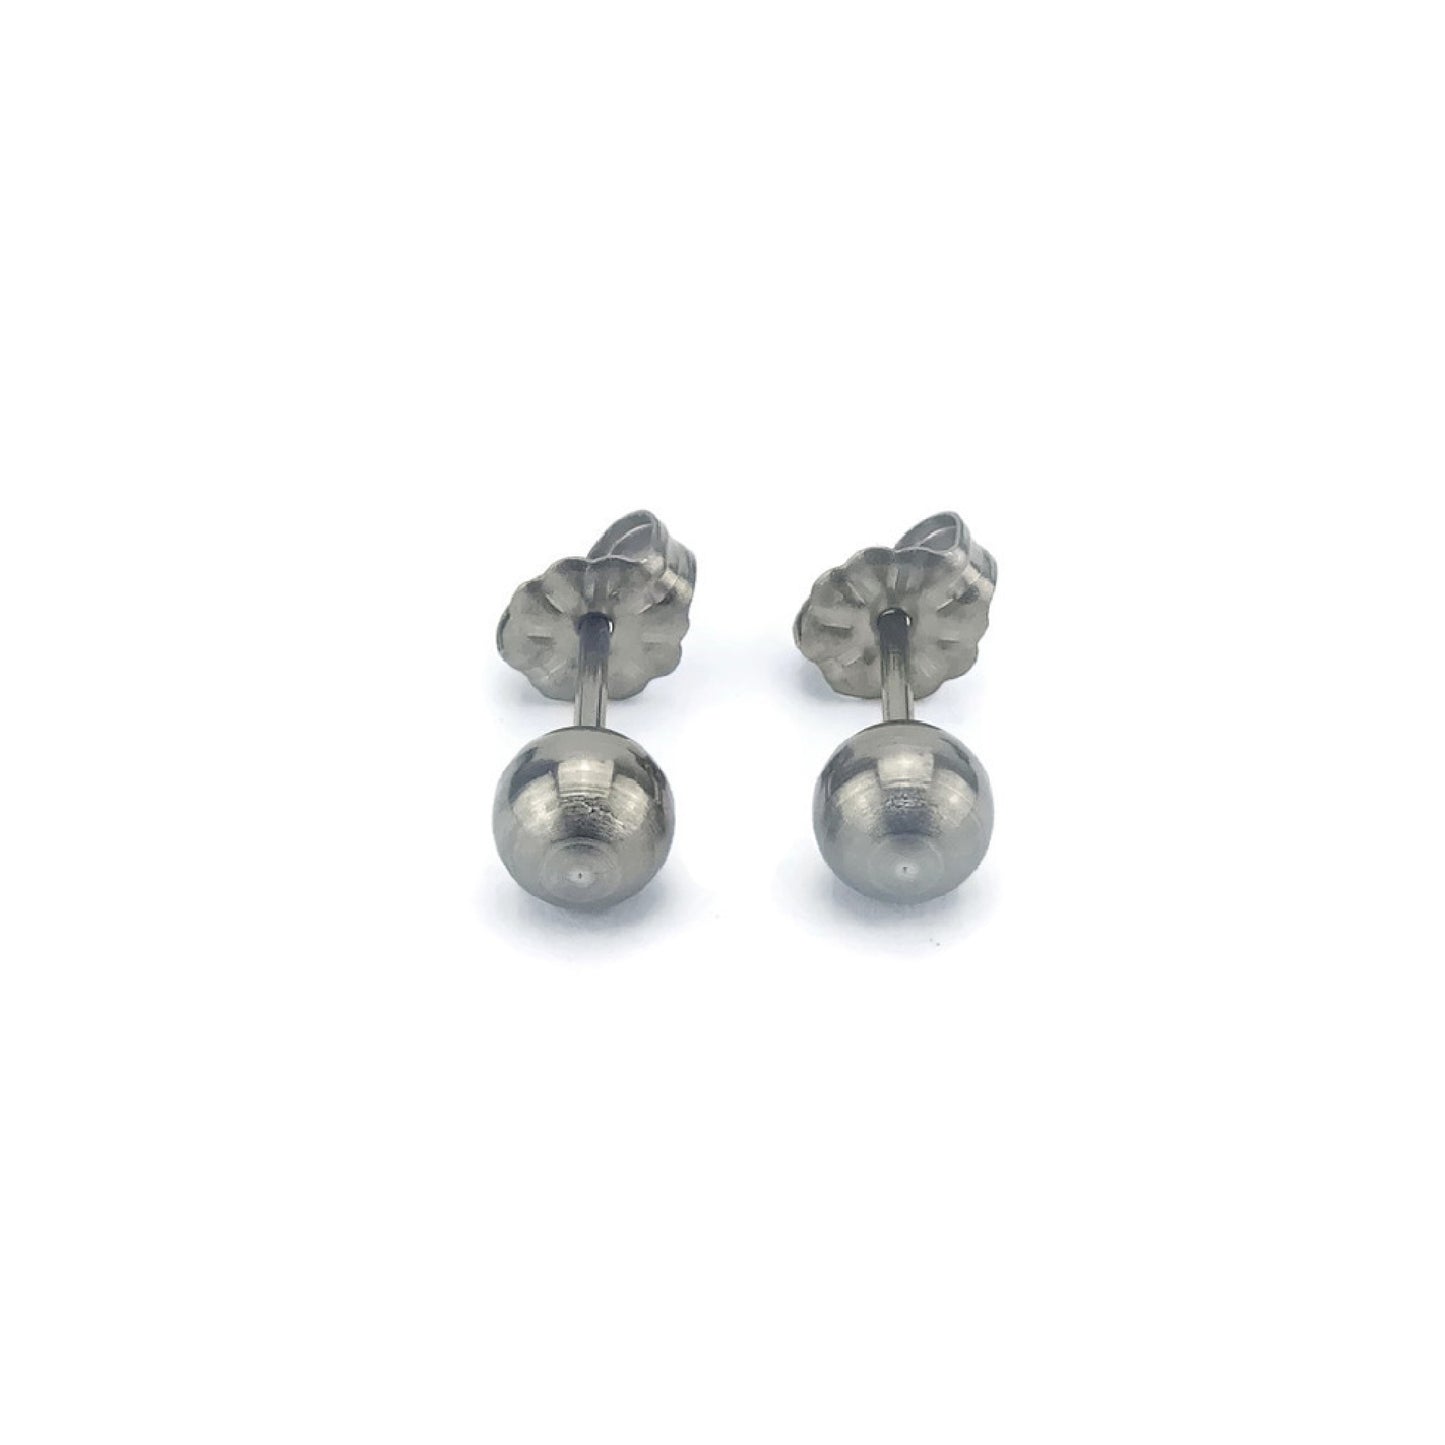 5mm Silver Stud Earrings Titanium Ball Posts